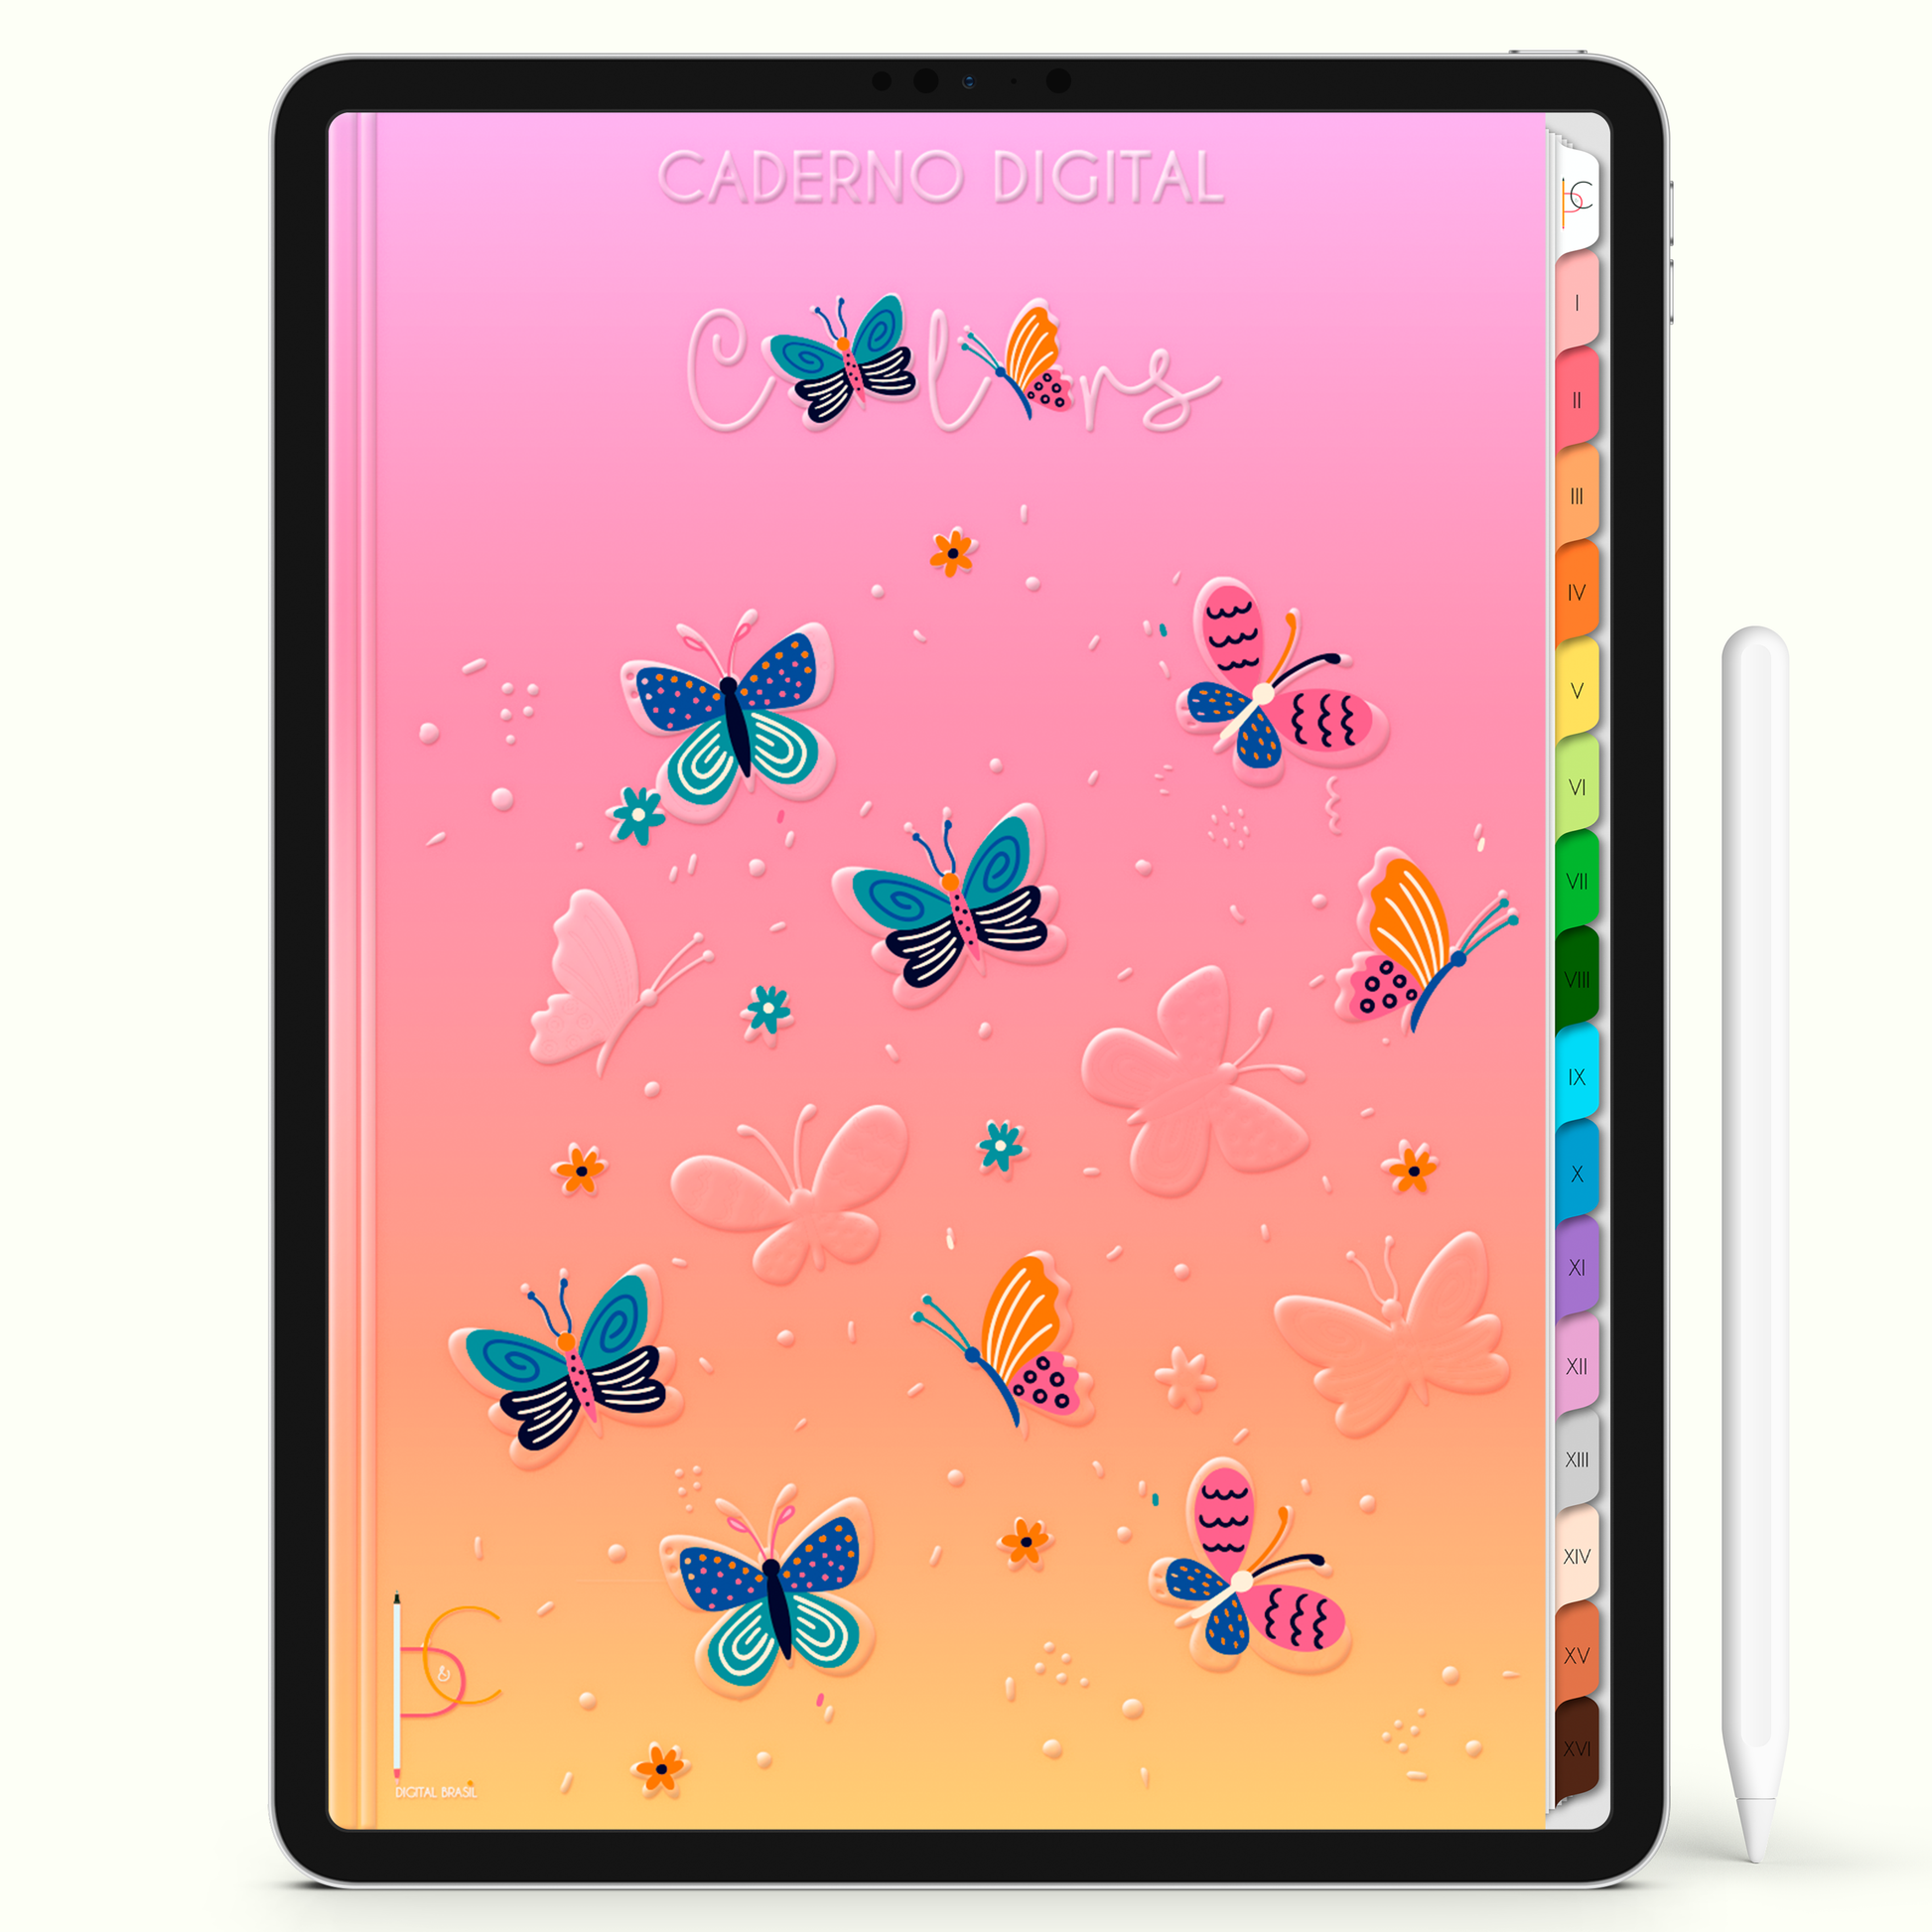 Caderno Digital Colors Jardim das Borboletas 16 Matérias • iPad Tablet Android • Download instantâneo • Sustentável